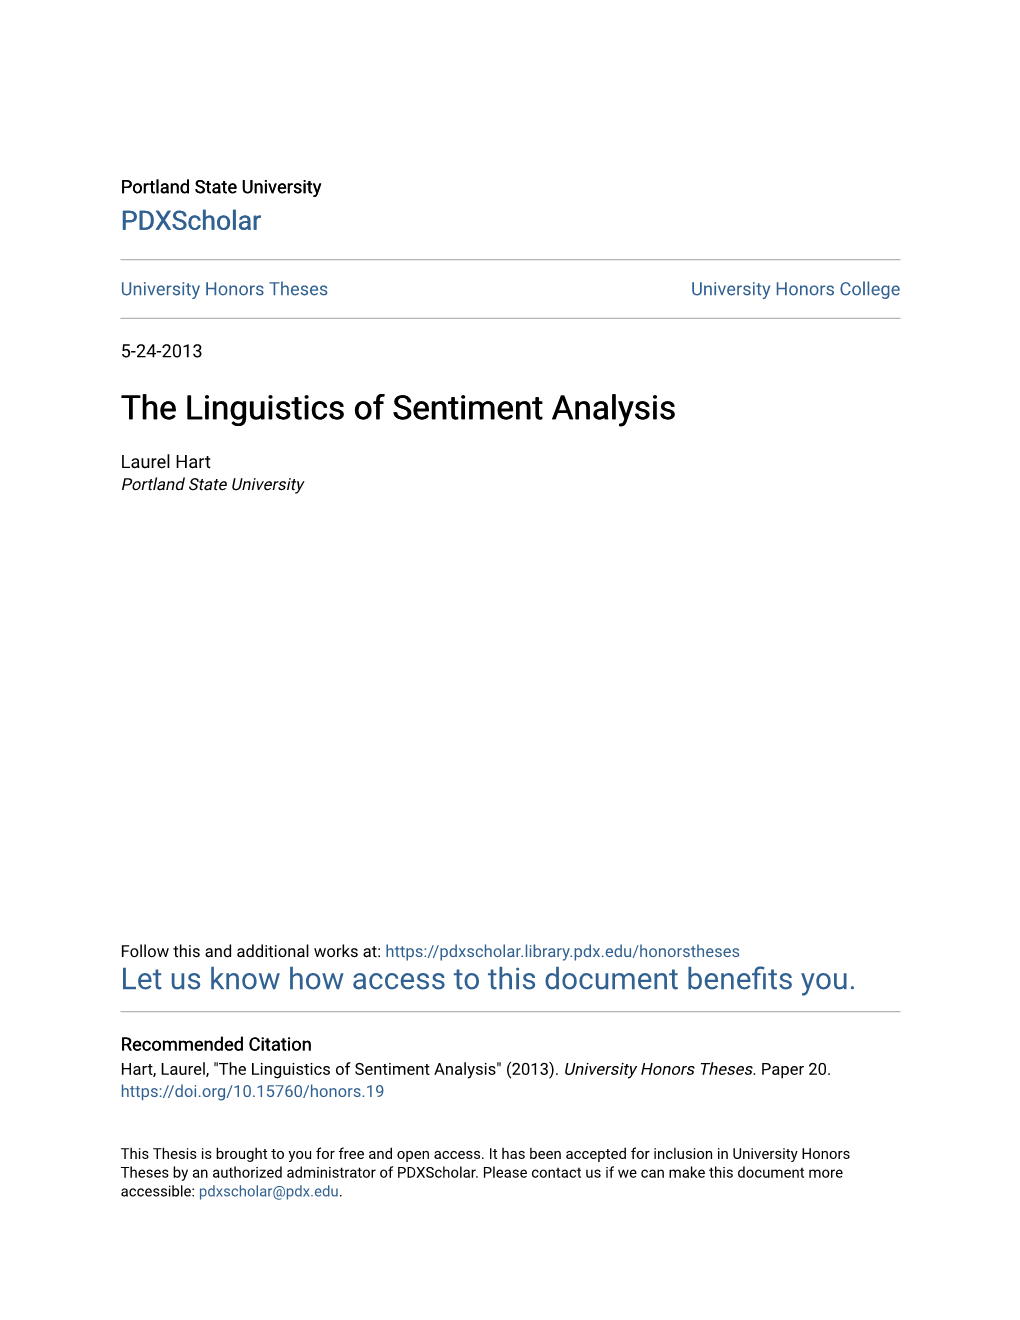 The Linguistics of Sentiment Analysis